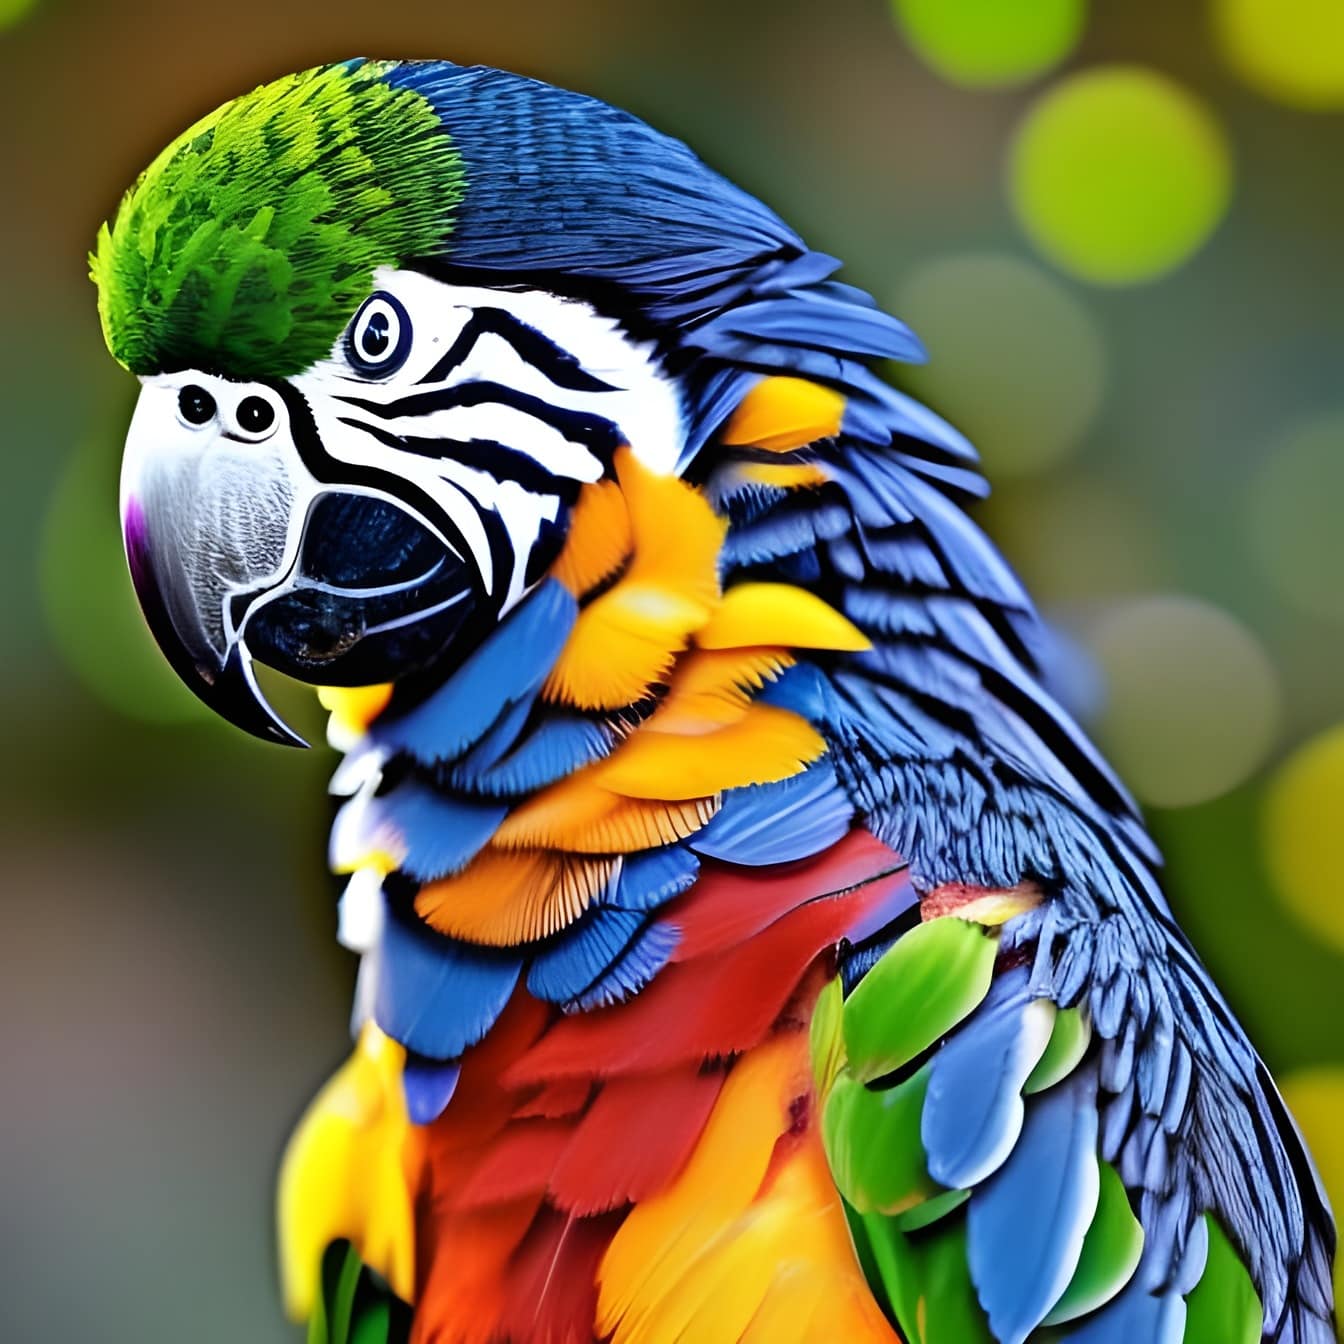 Macaw, Kakatua, warna-warni, bulu, kepala, karya seni, ilustrasi, hewan